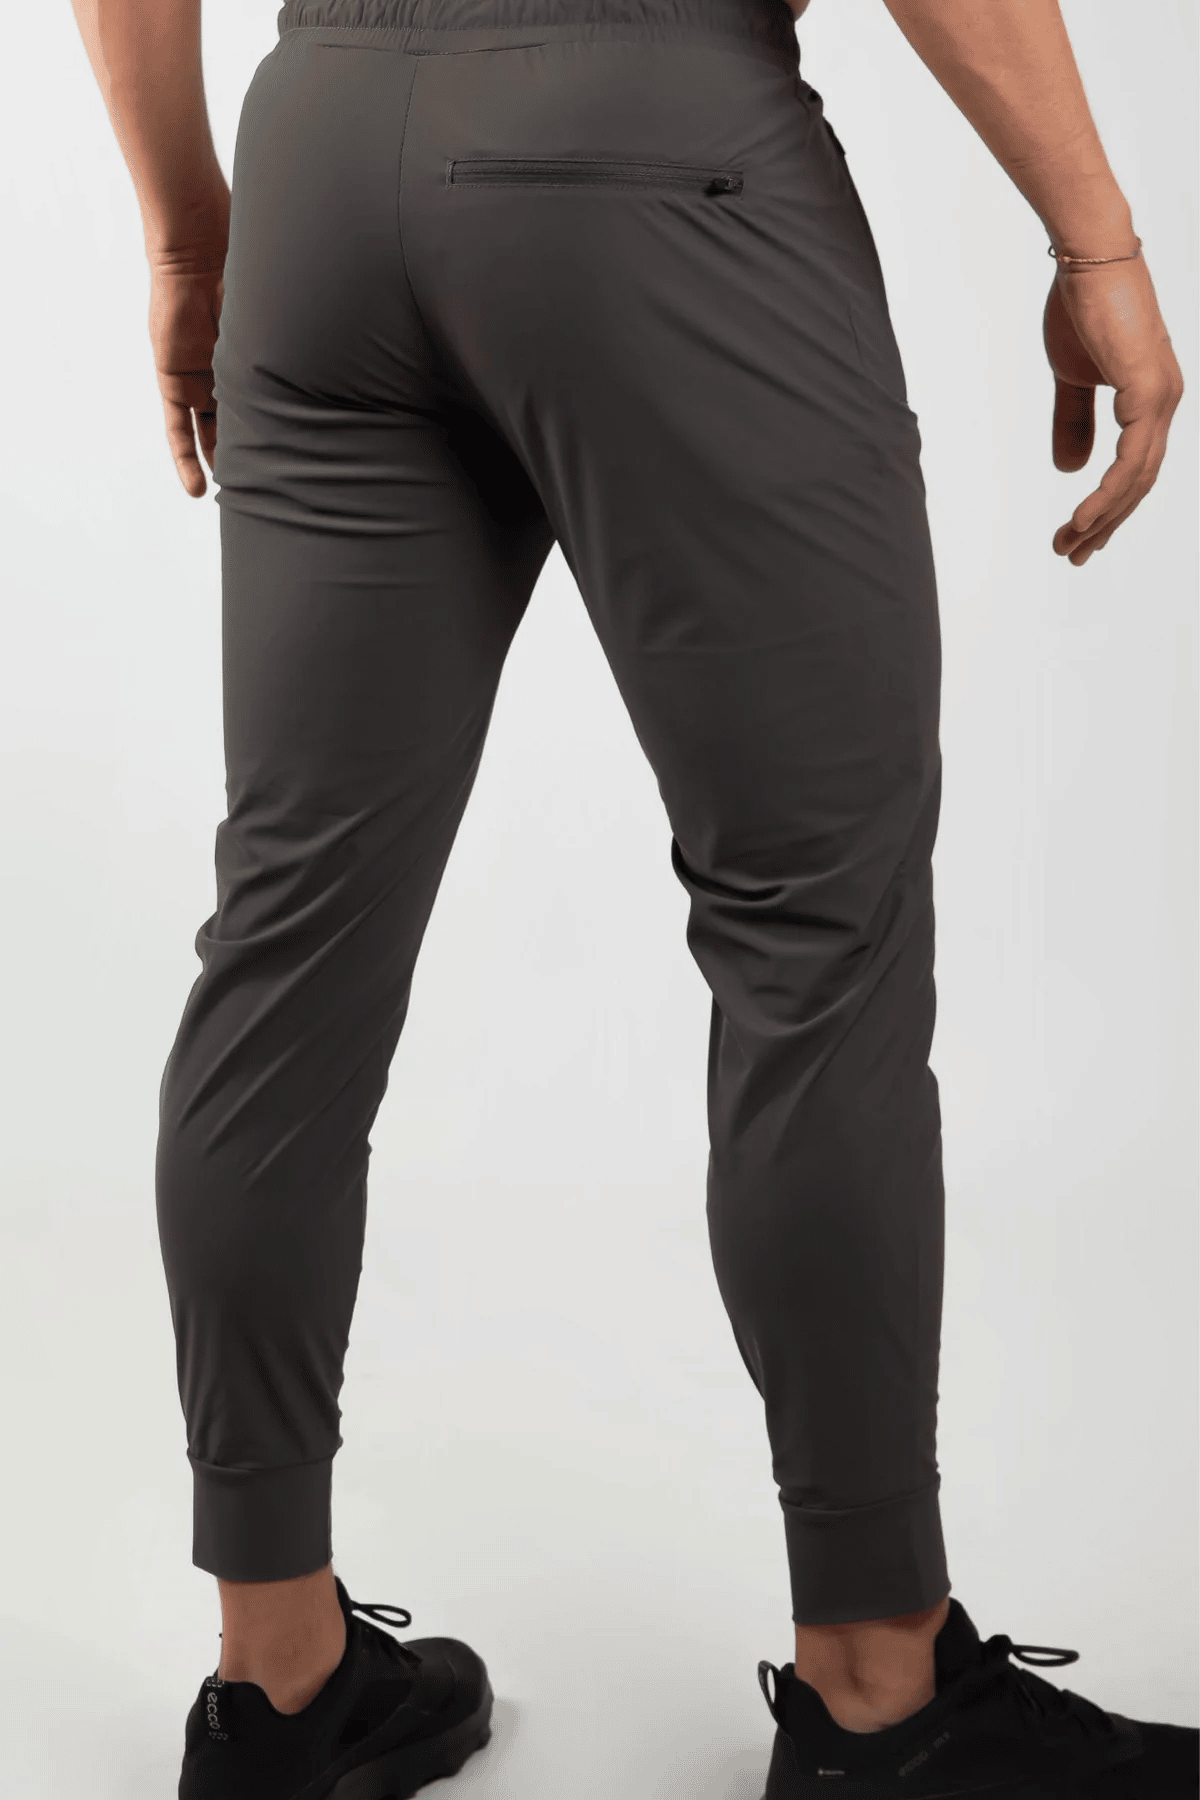 Joggers  Sweatpants  Short Inseam Sizes  Under 510